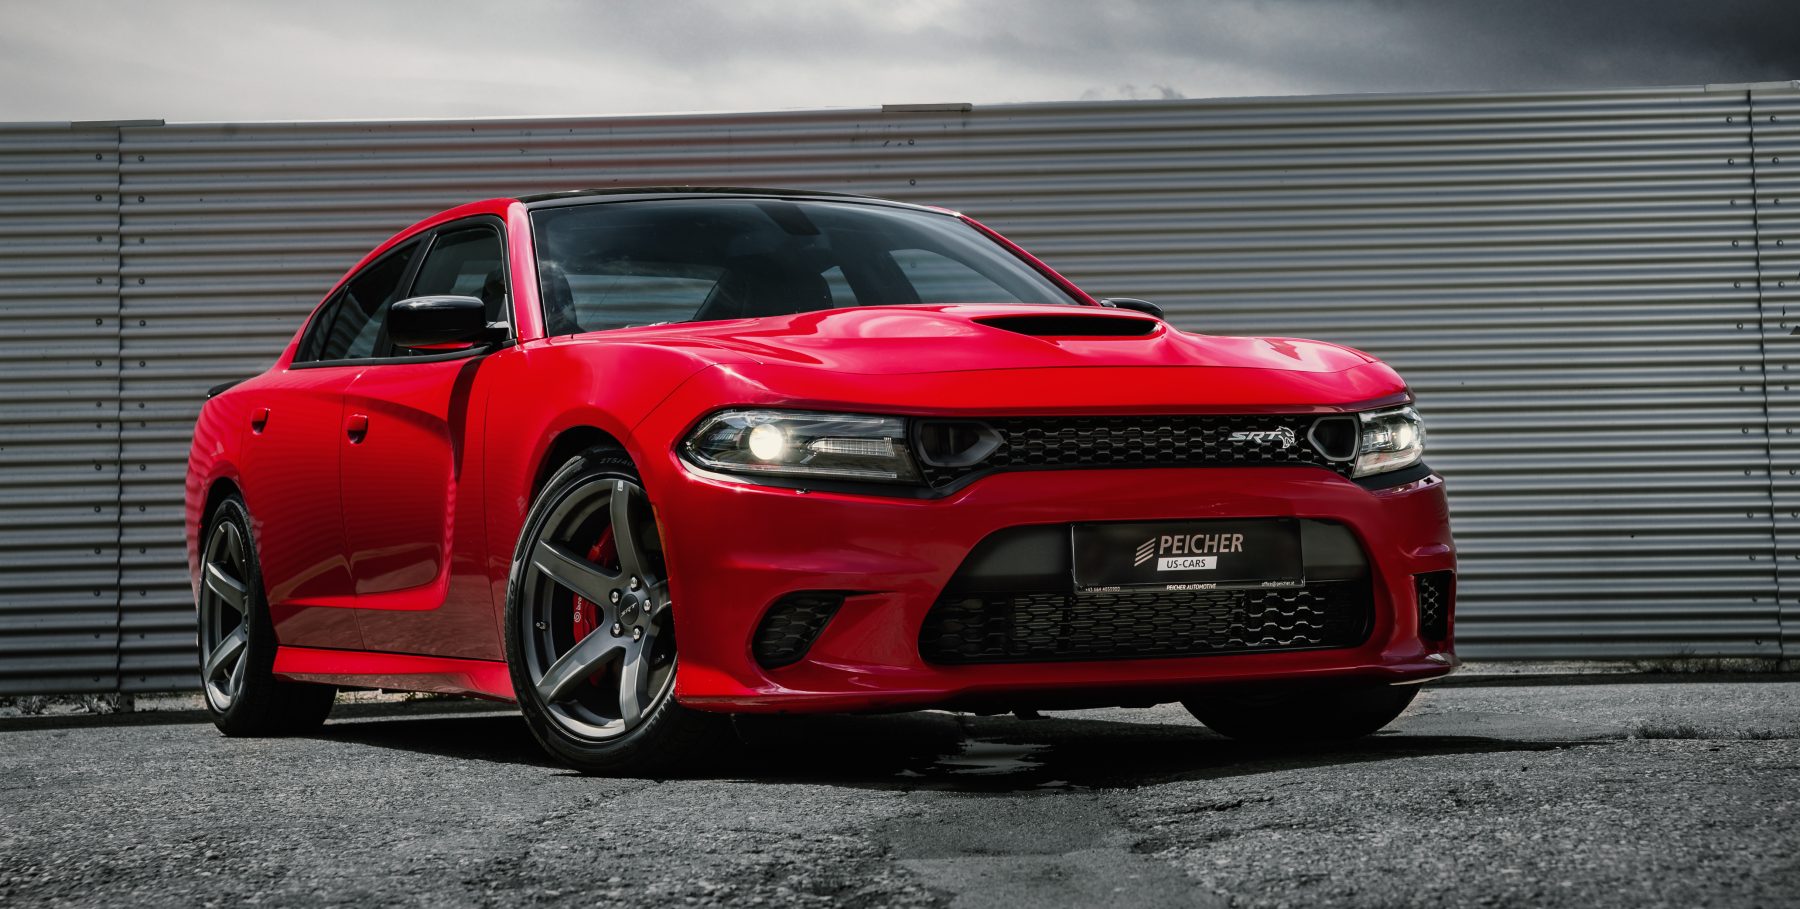 https://www.peicher-automotive.com/cms/wp-content/uploads/2019/09/PEICHER-US-Cars-2019-Dodge-Charger-SRT-Hellcat-Red-22-e1568295333323-1800x909.jpg